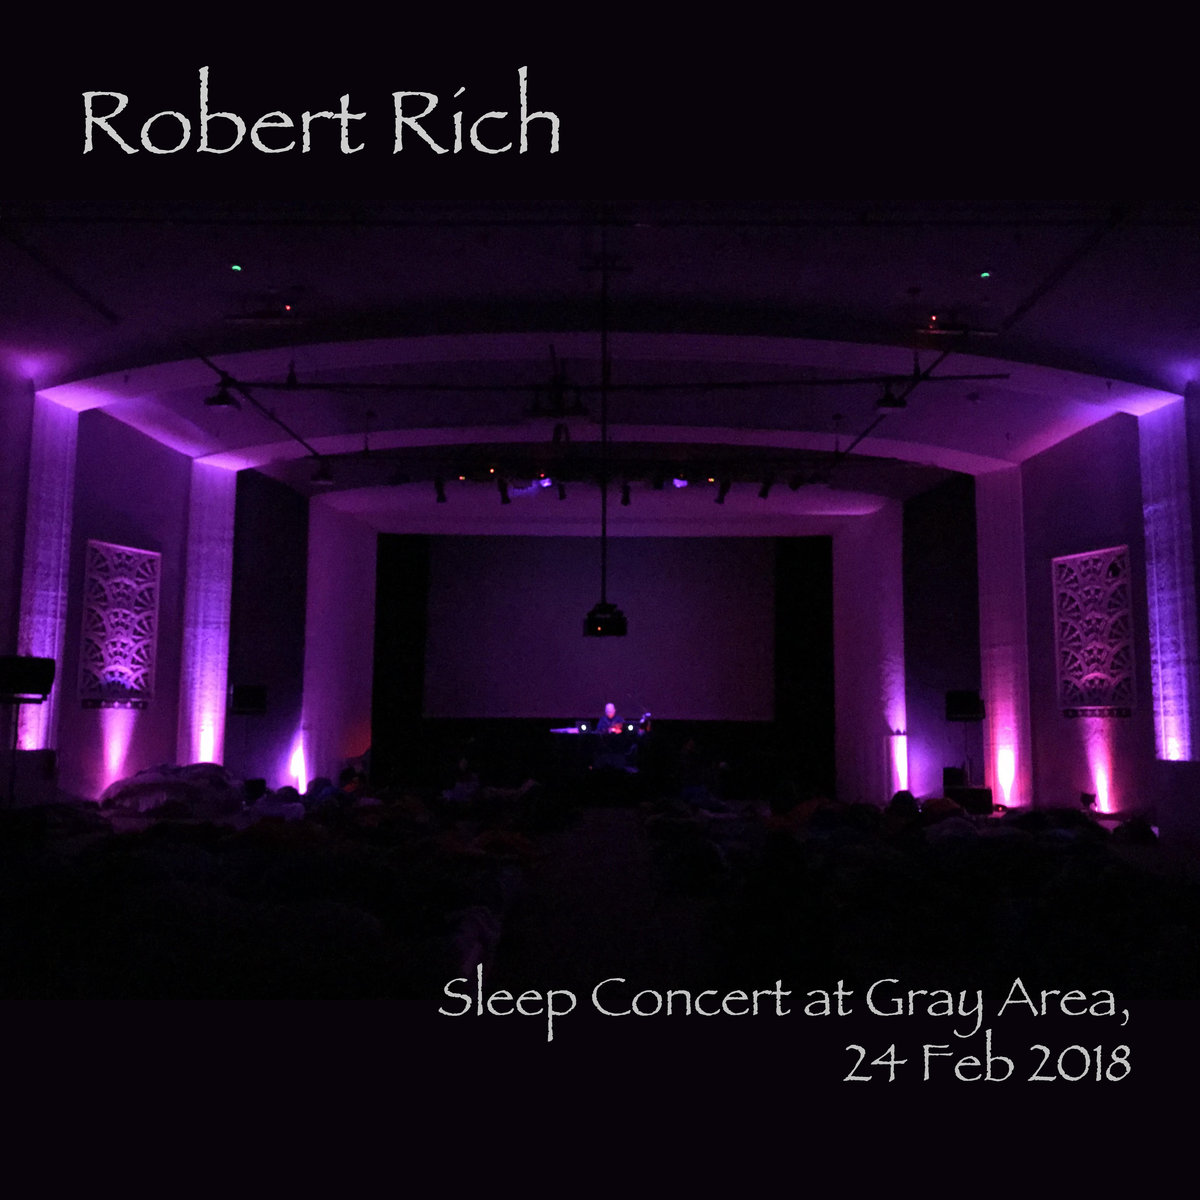 Sleep Concert at Gray Area Album Cover